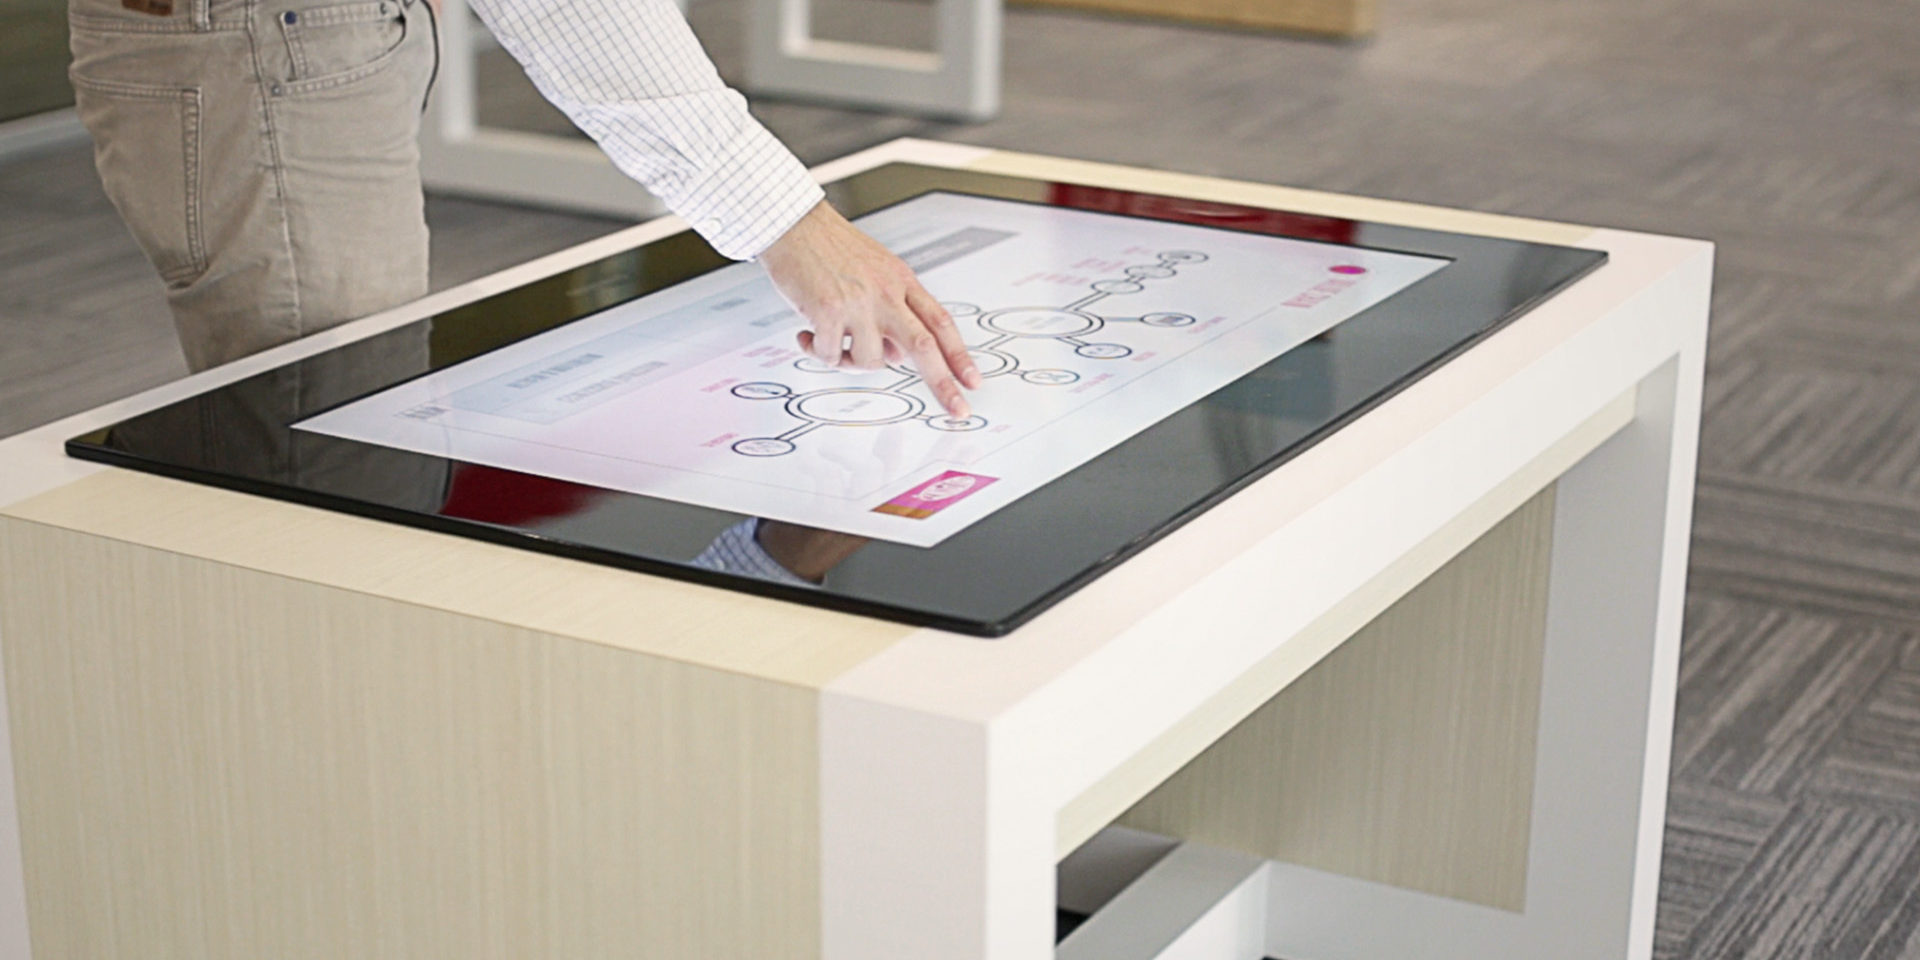 Johnston Innovation Center Tabletop Touchscreen Interactive